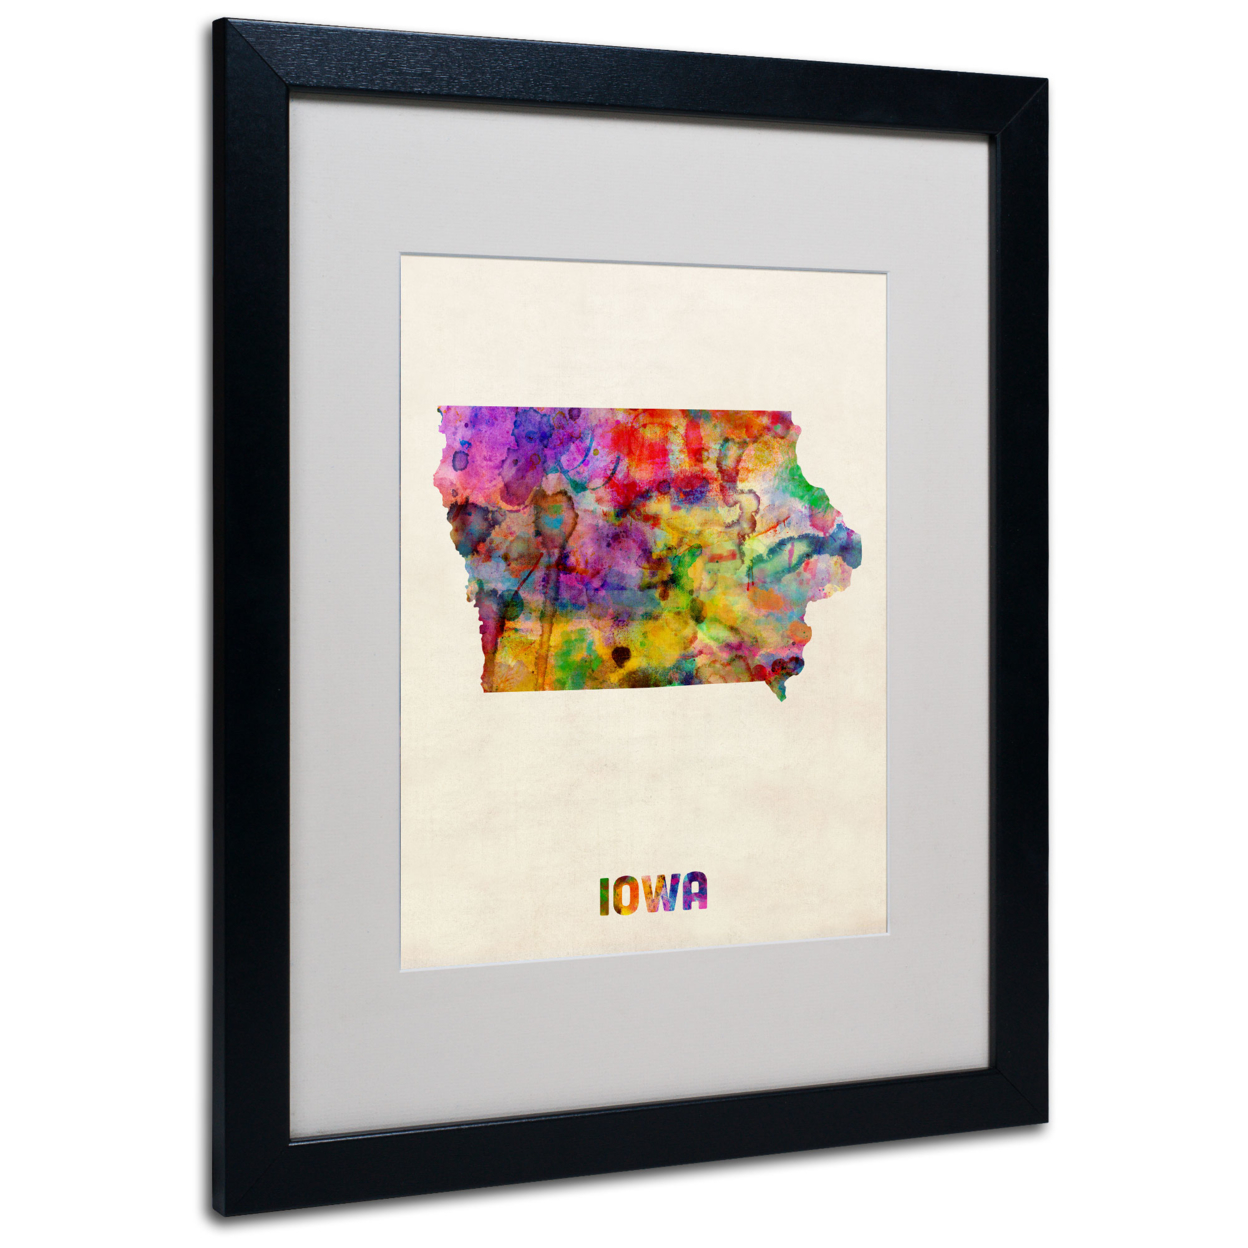 Michael Tompsett 'Iowa Map' Black Wooden Framed Art 18 X 22 Inches